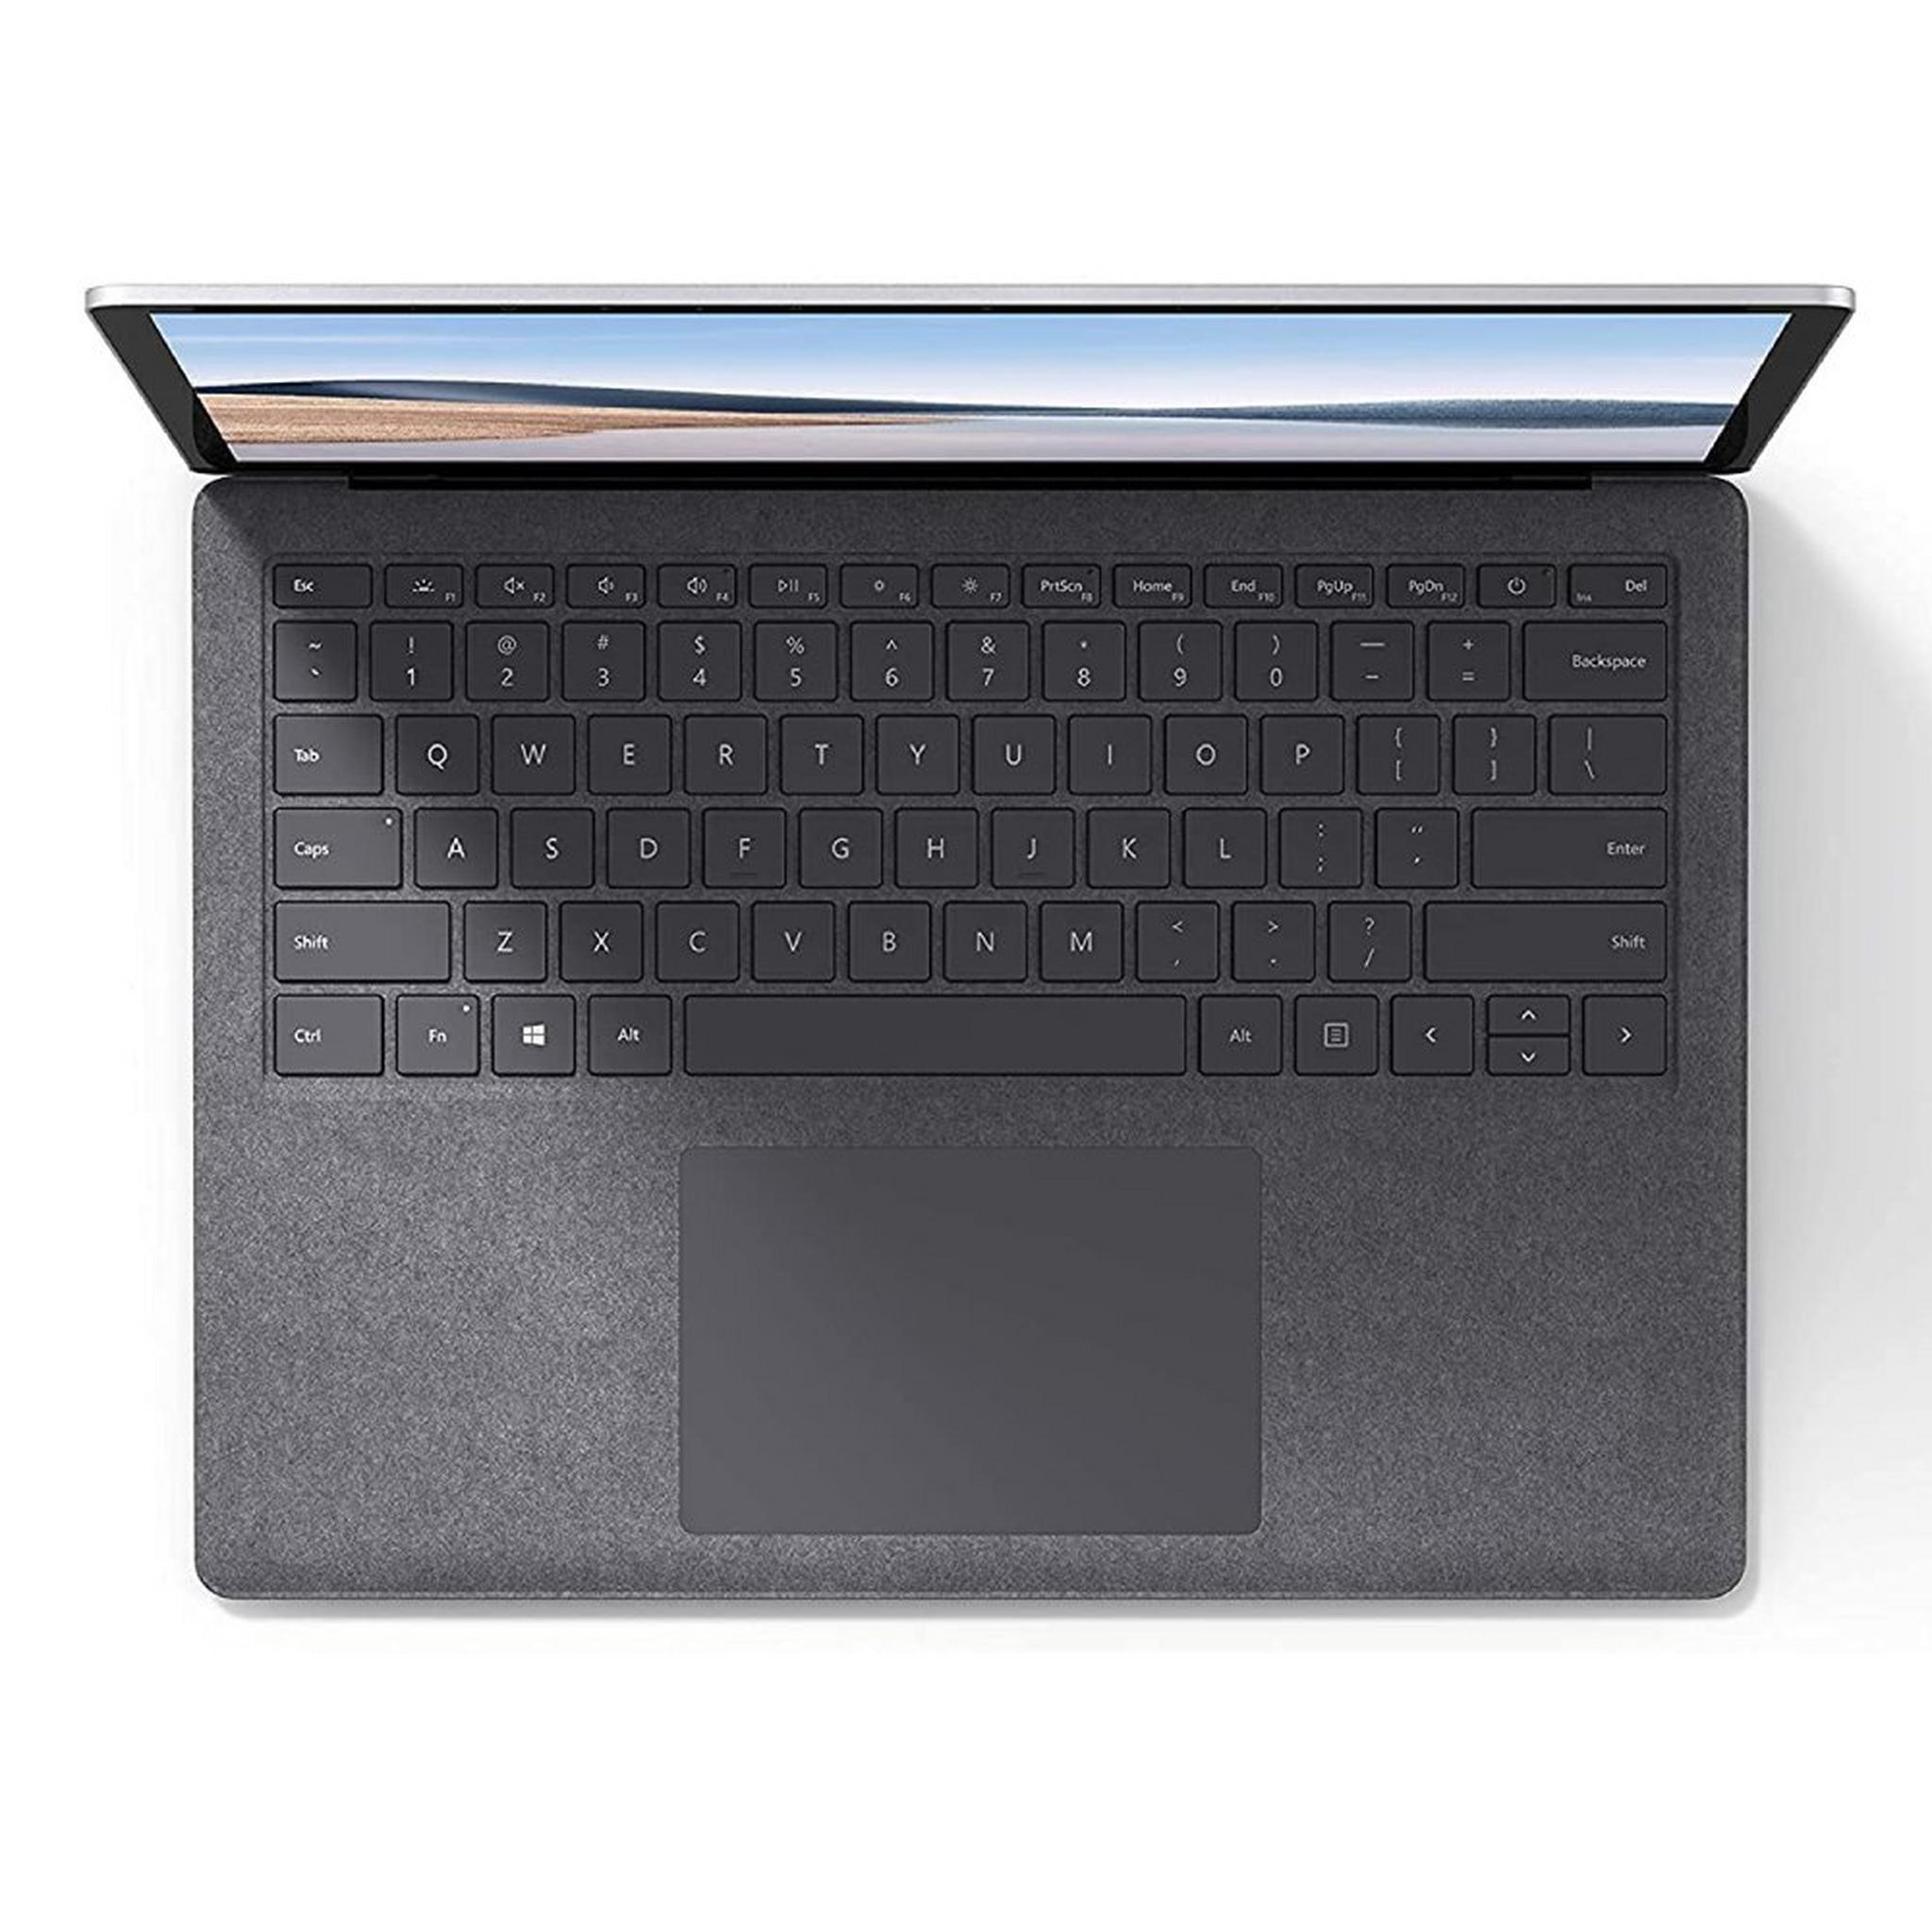 Microsoft Surface Laptop 4 Intel Core i7 11th Gen, 16GB RAM, 512GB SSD, 13.5-inch touch screen, Intel graphics Iris Xe, 5EB-00126 - Platinum